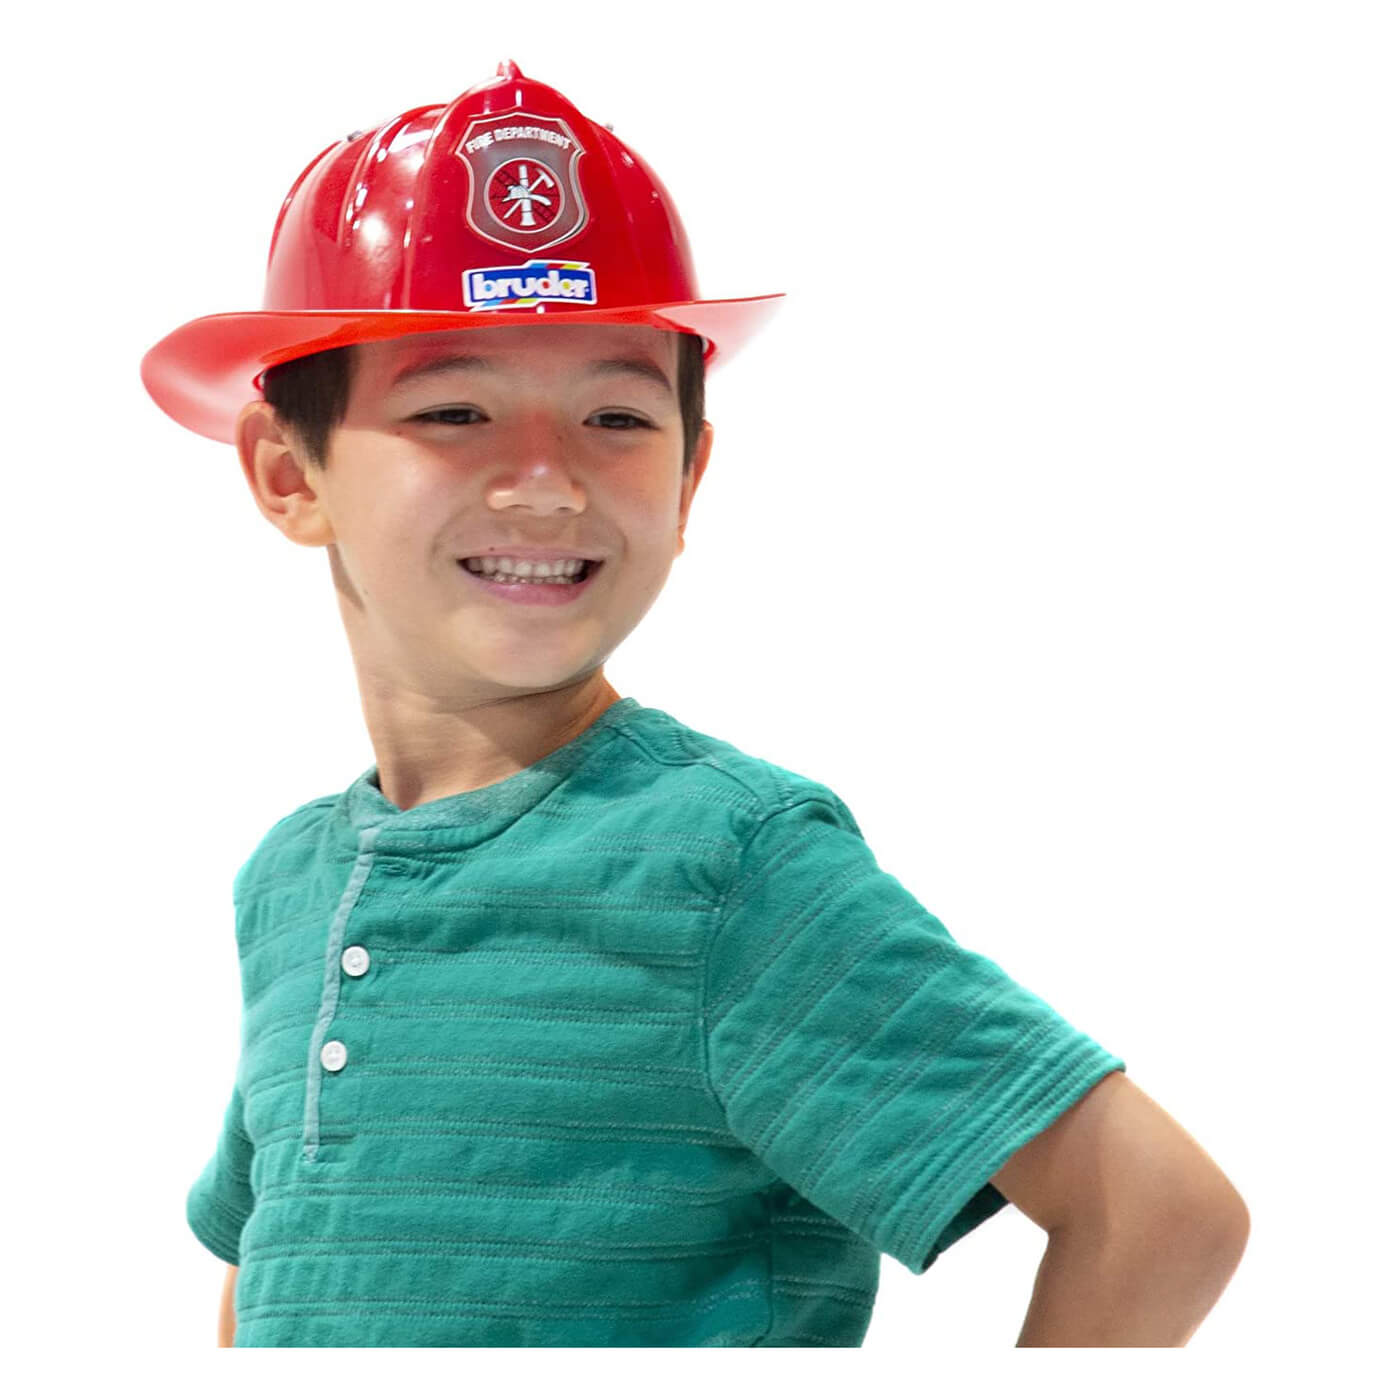 Kid wearing the Bruder Firefighter Hat.